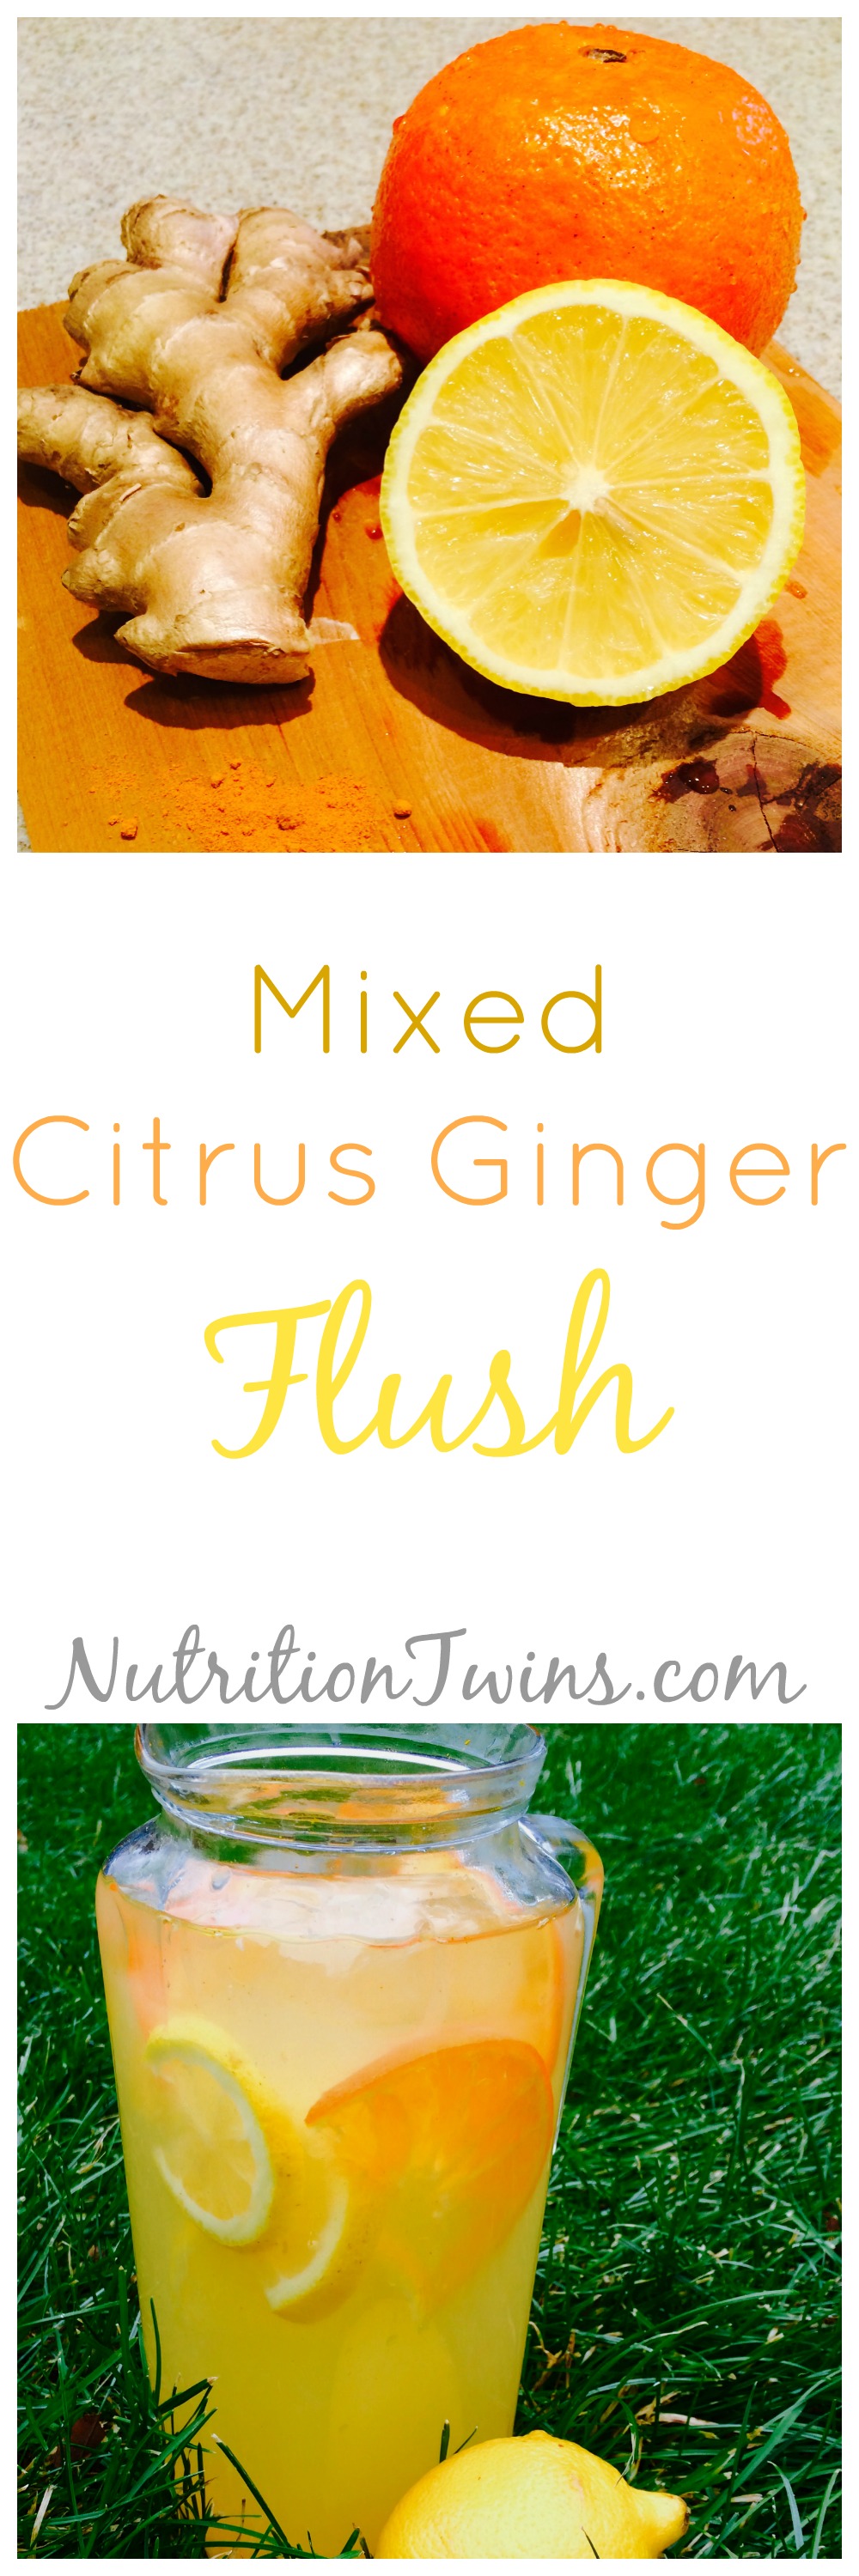 Mixed_Citrus_Ginger_Flush_Collage